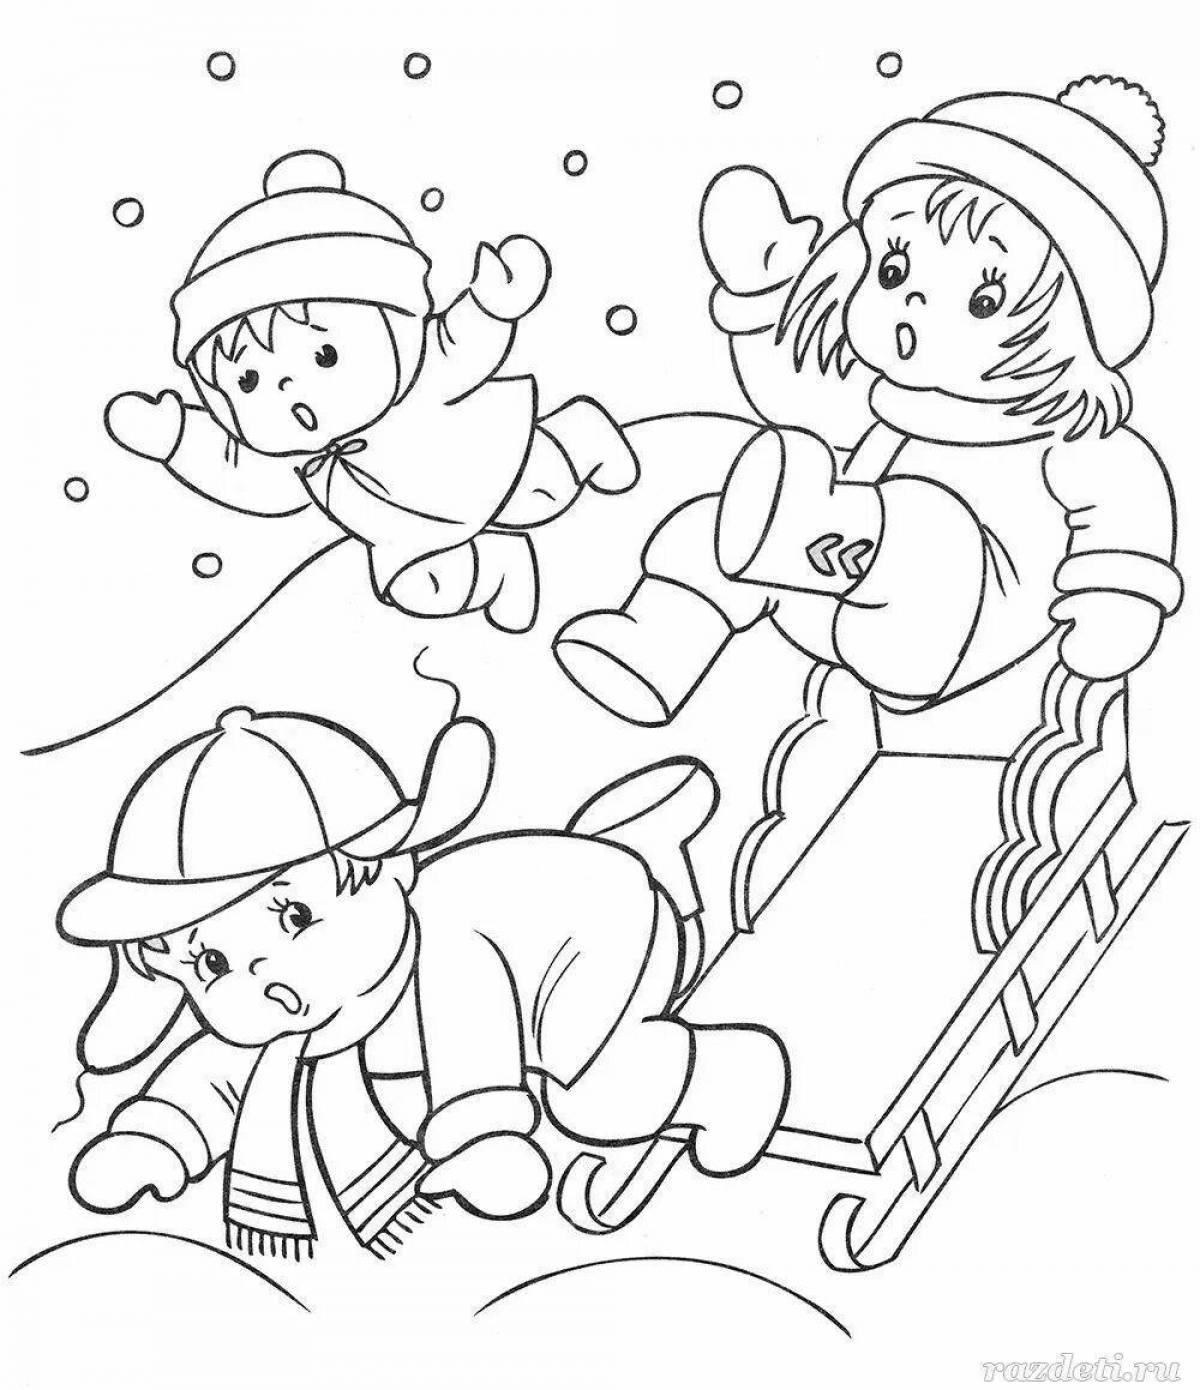 Bright coloring winter fun for children 3-4 years old in kindergarten